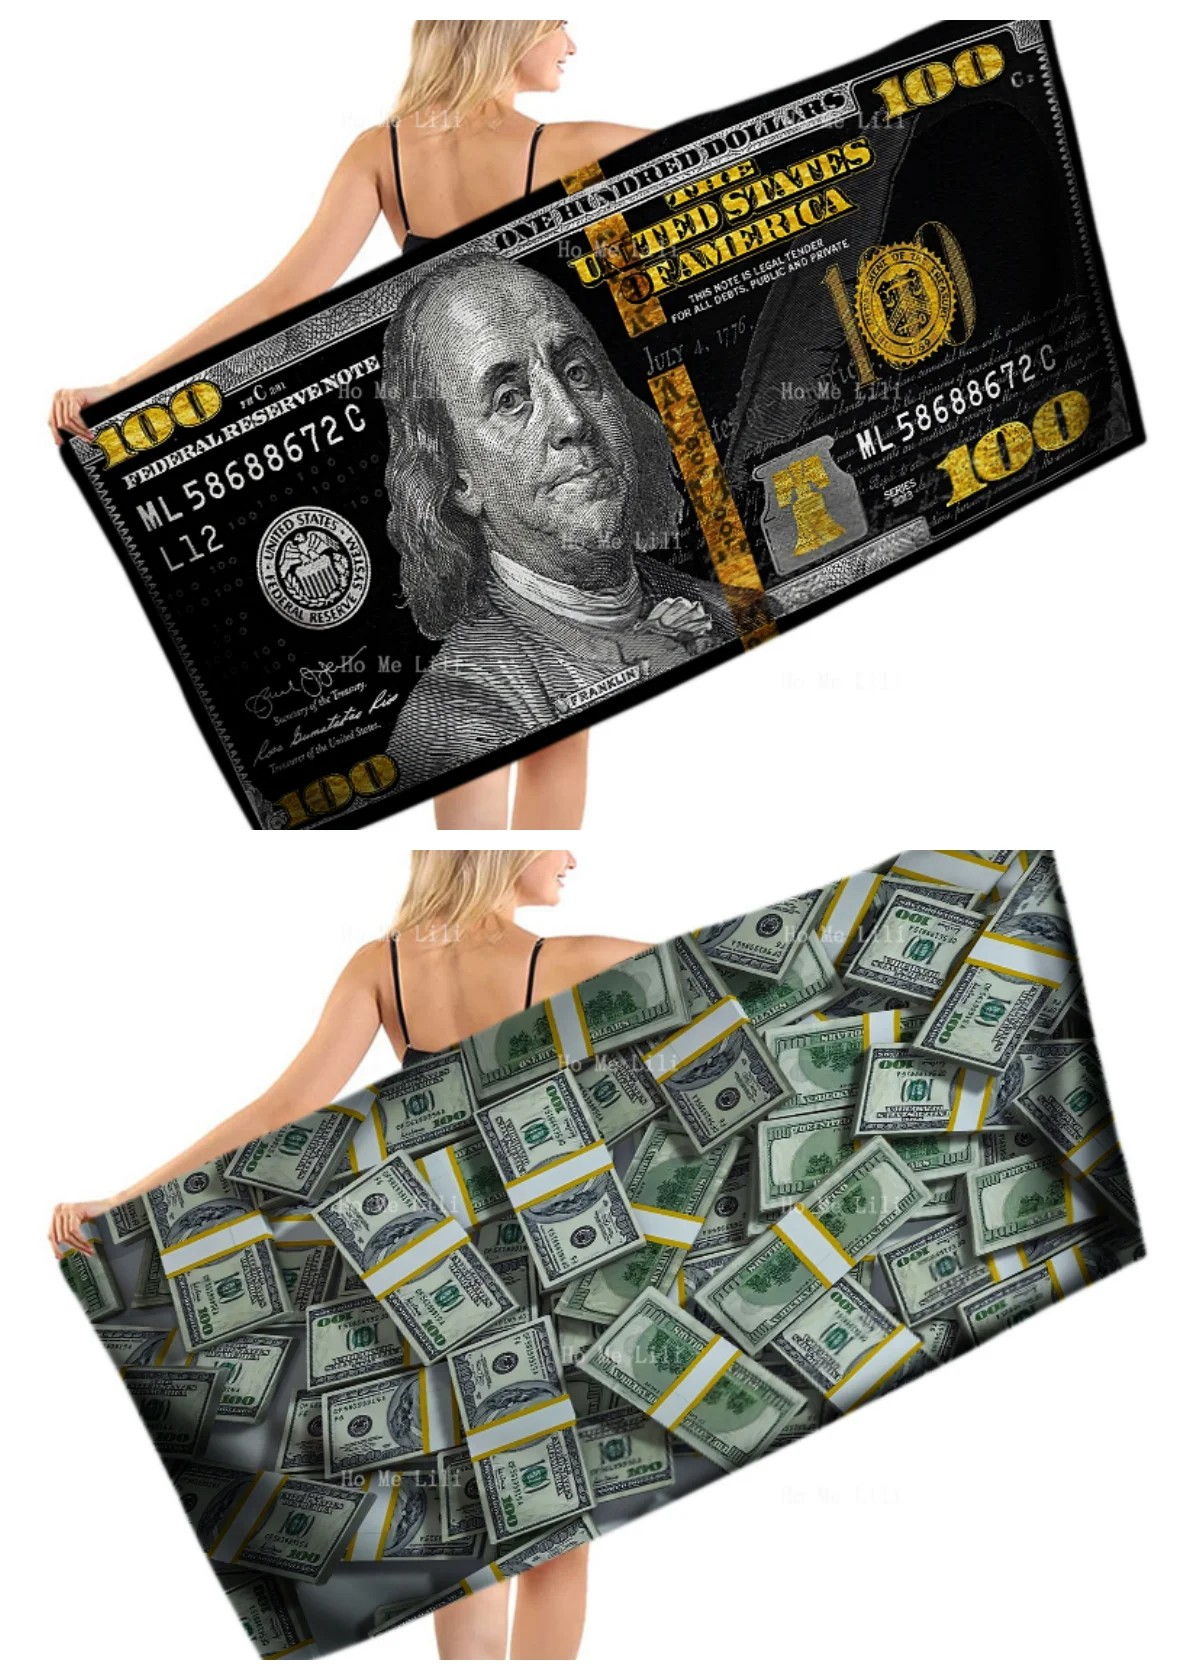 

Художественная картина с изображением портрета Председателя-основателя Бенджамина Франклина на спортивном полотенце с изображением банкнота 100 доллара